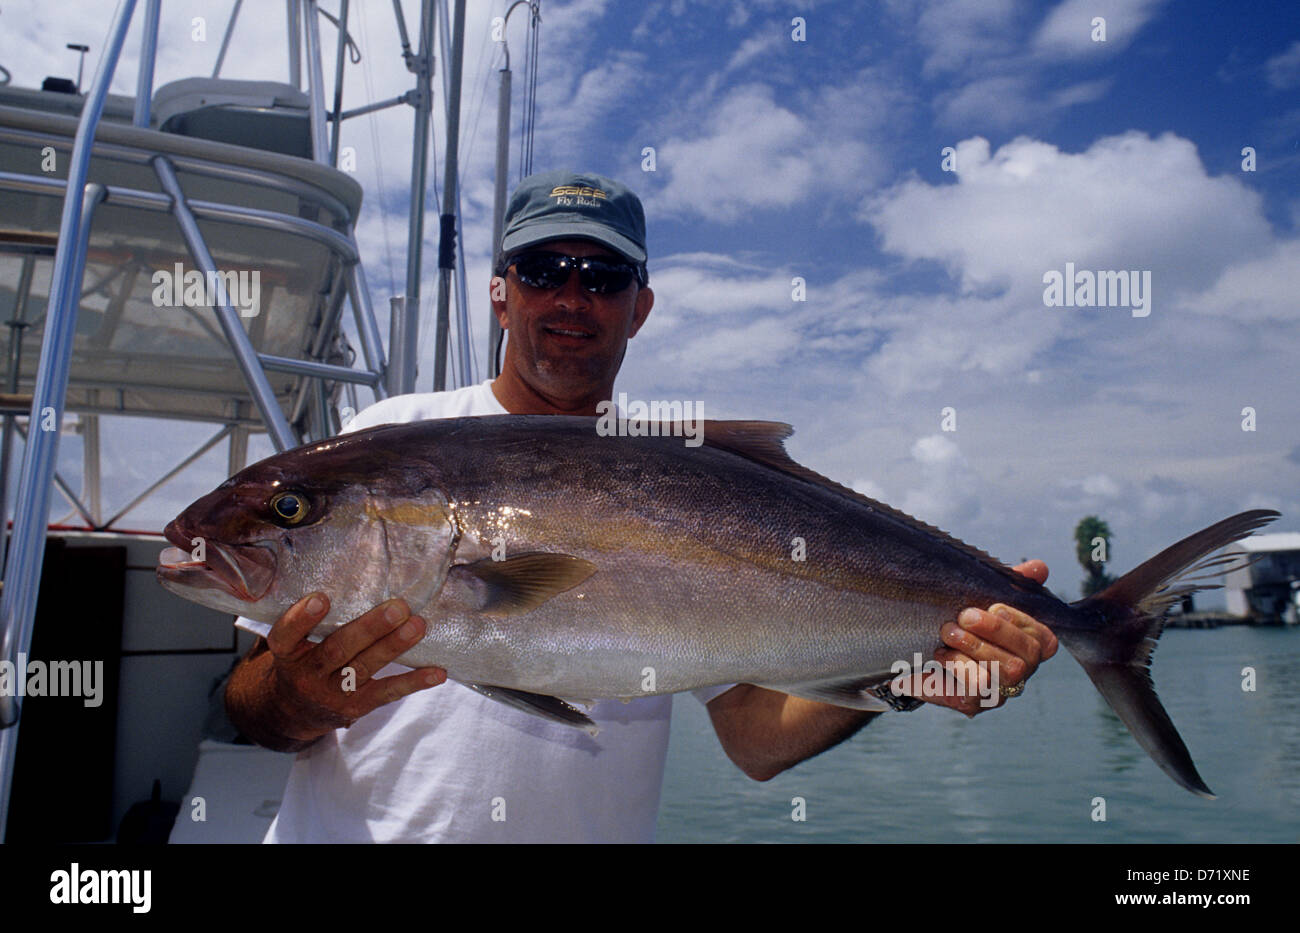 Fisherman holding a greater amberjack ((Seriola dumerili)) caught while fishing offshore at Port Aransas Texas Stock Photo